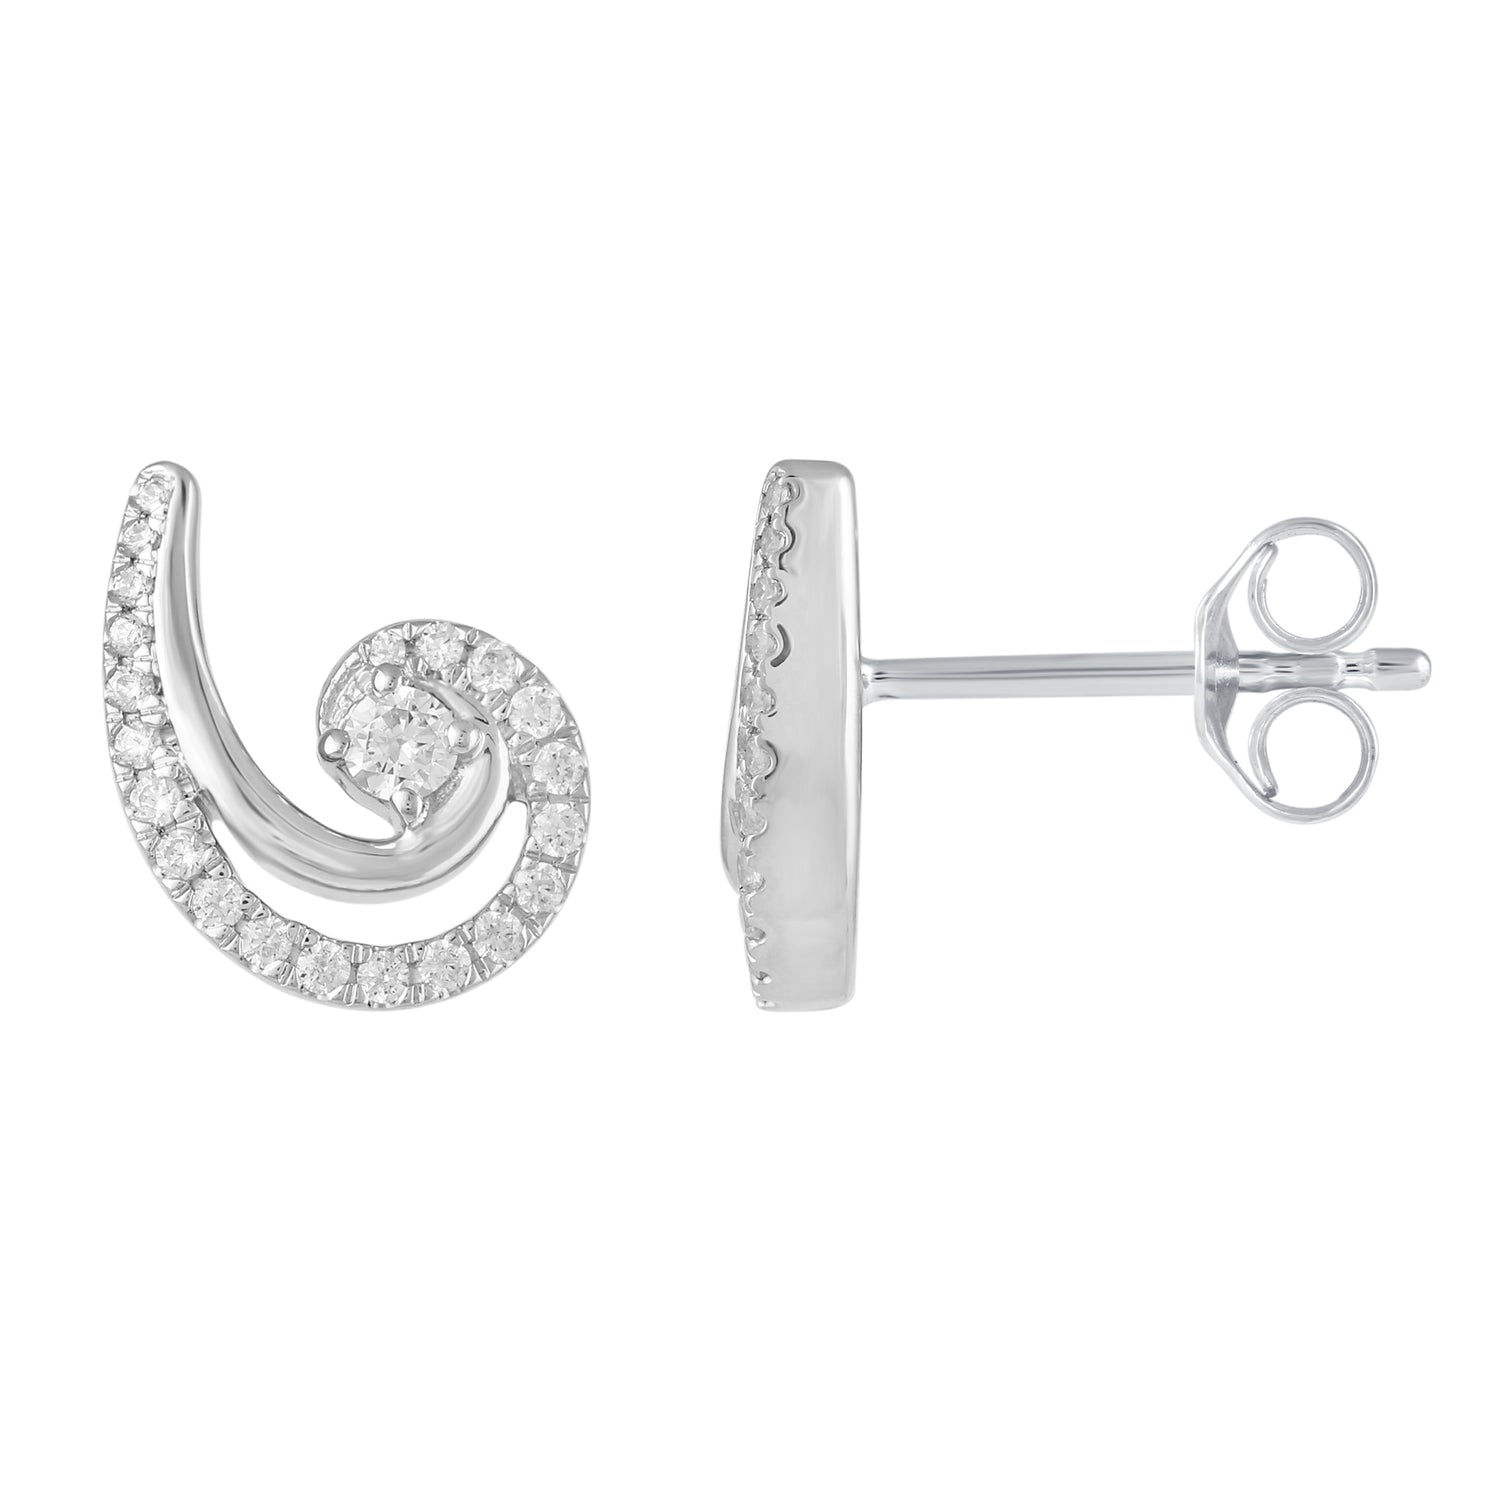 Set of 2 : 1/2 CT TW Diamond Duo Swirl Necklace & Earrings in 925 Sterling Silver